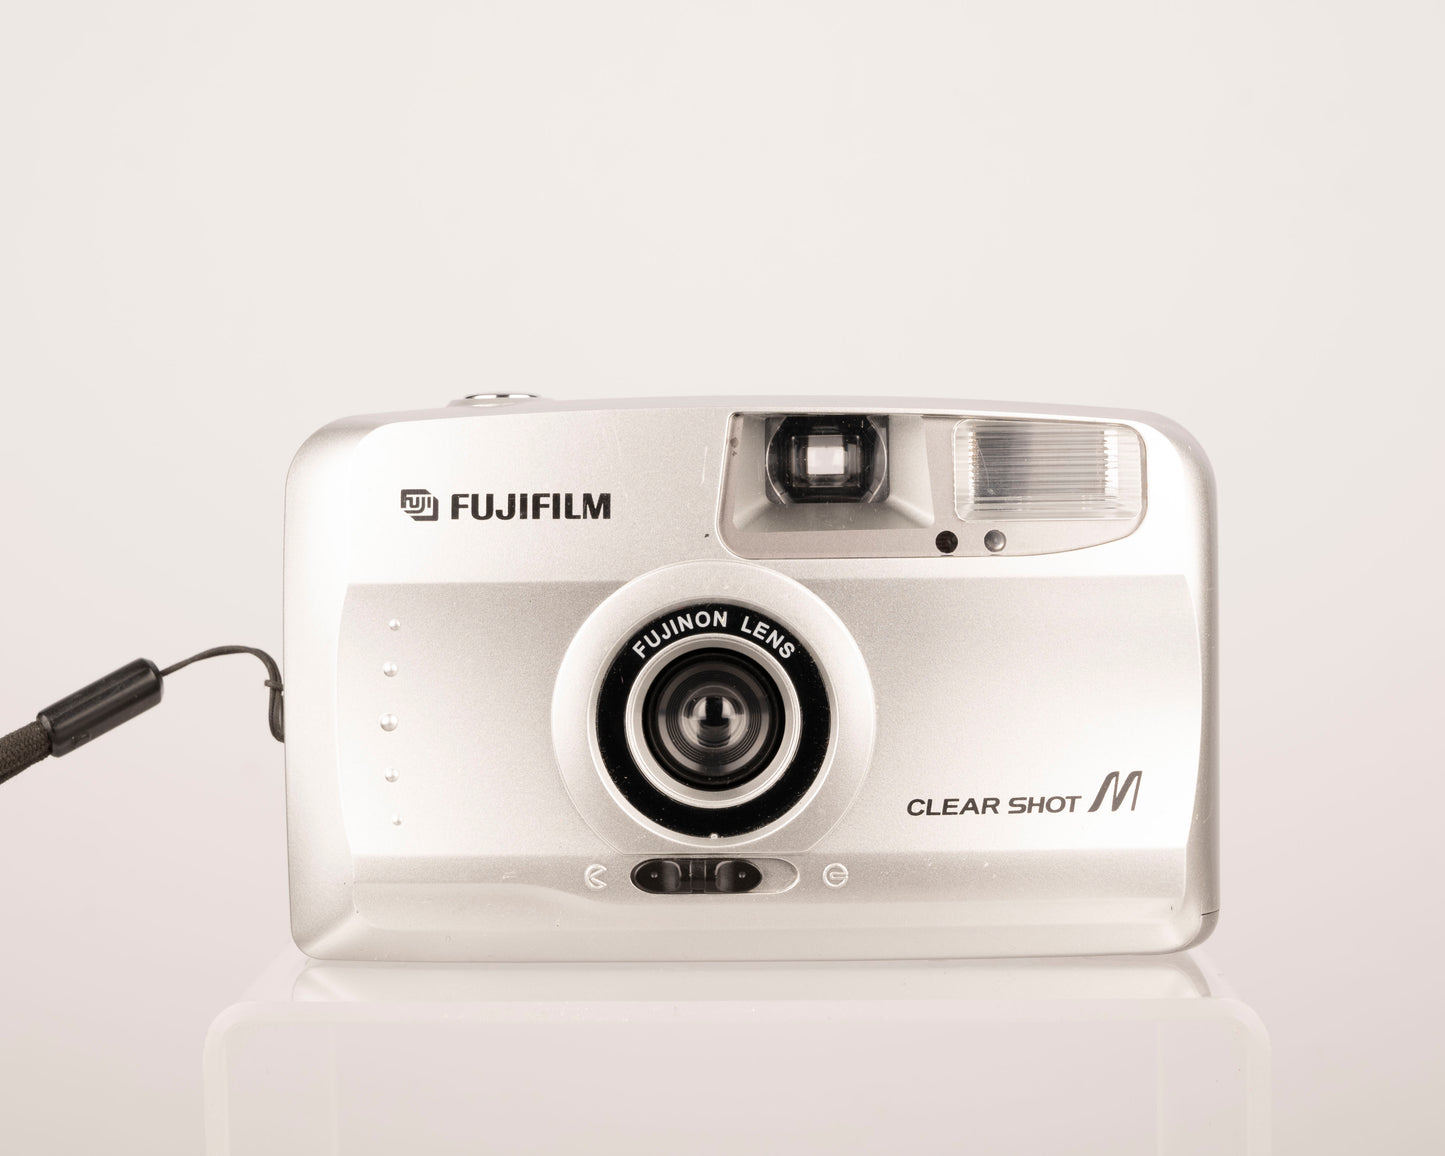 The Fujifilm Clear Shot M compact 35mm film camera